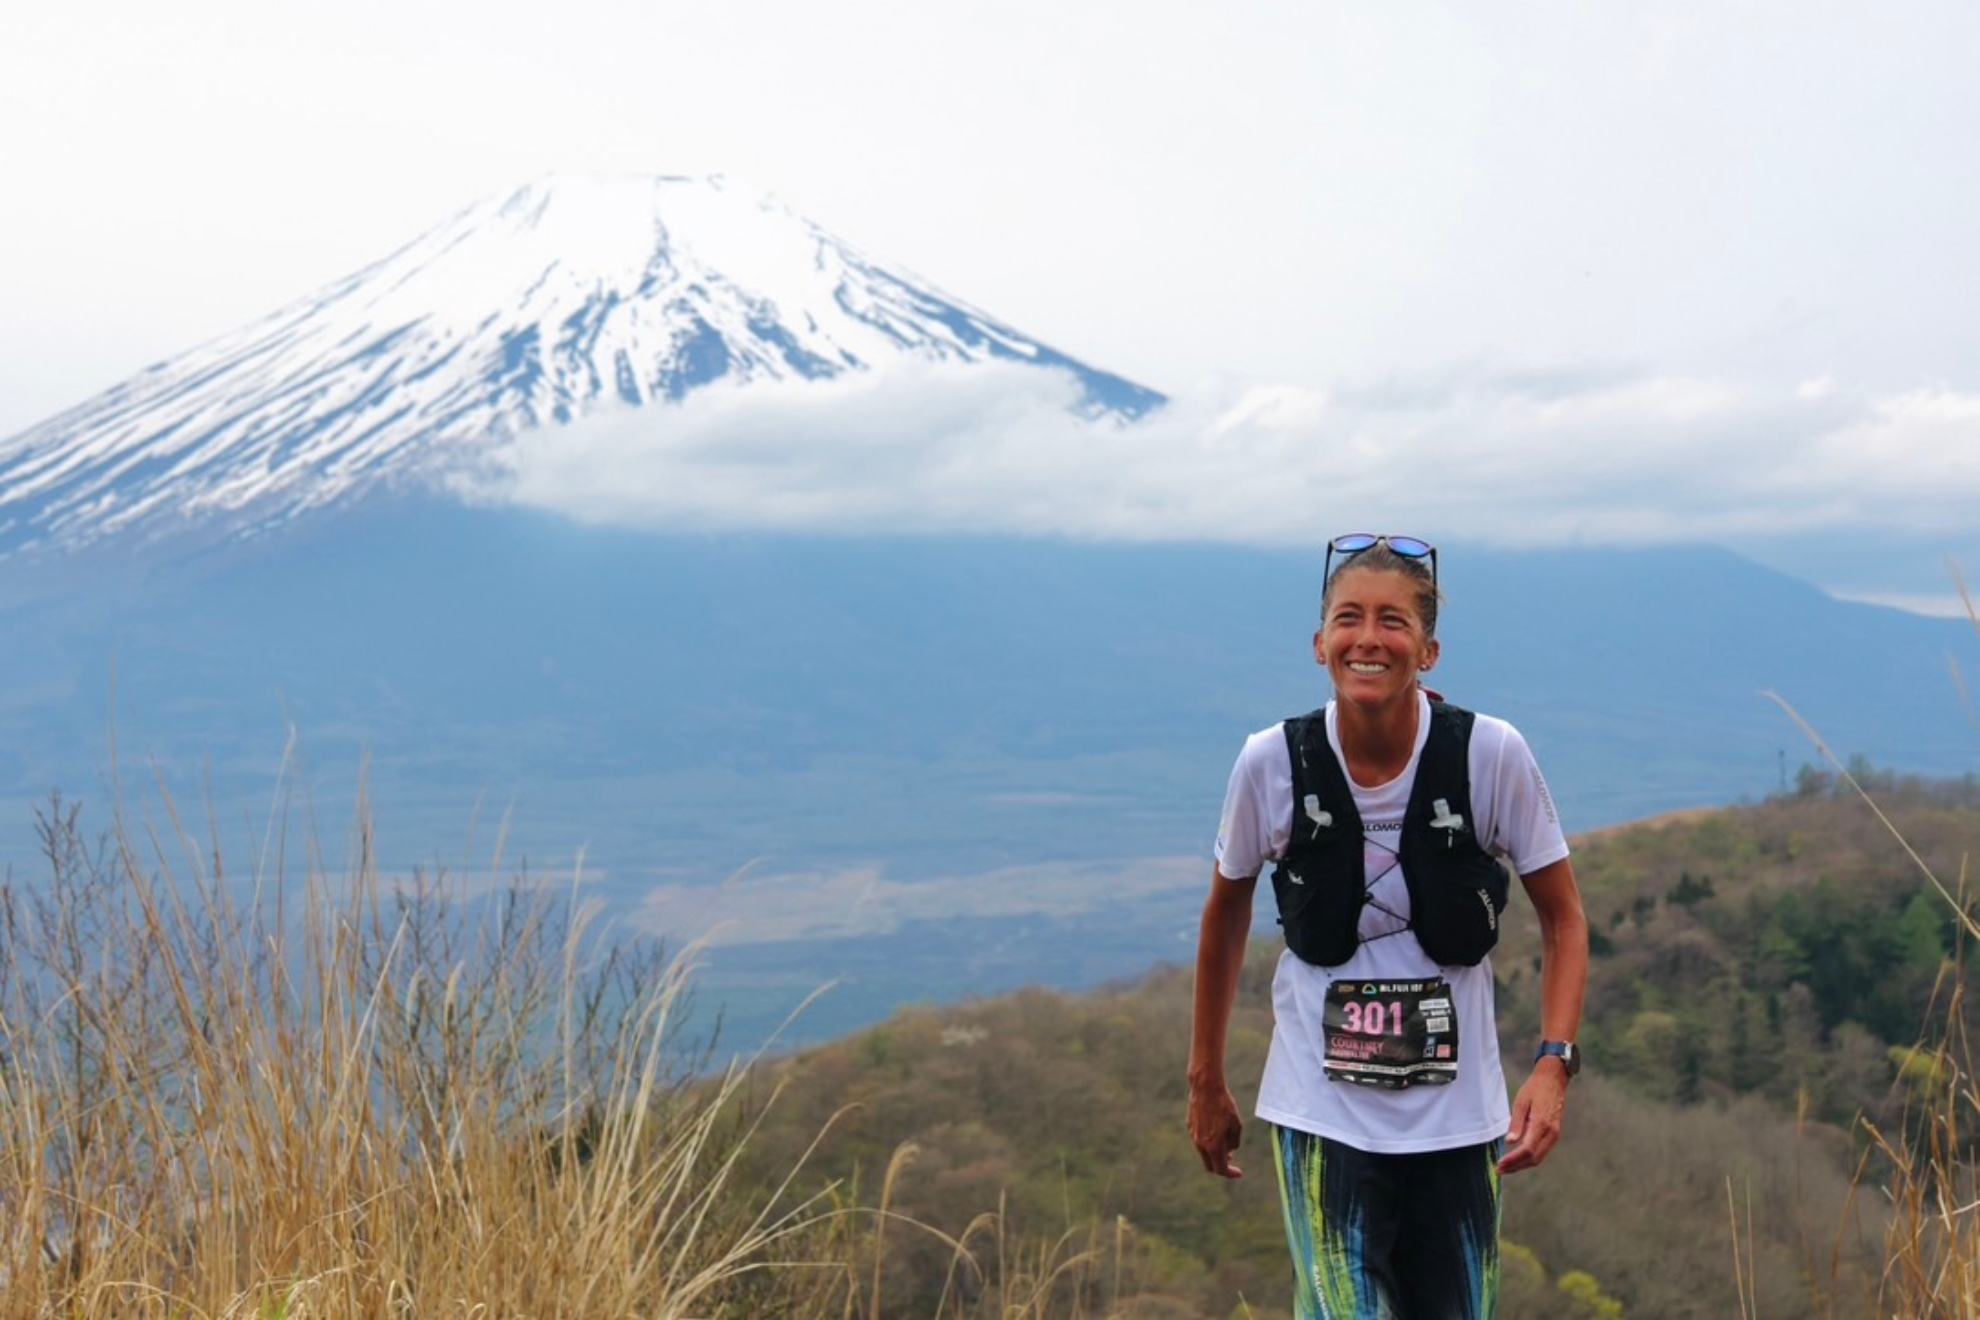 Courtney Dauwalter, en el Ultra Trail del Monte Fuji.